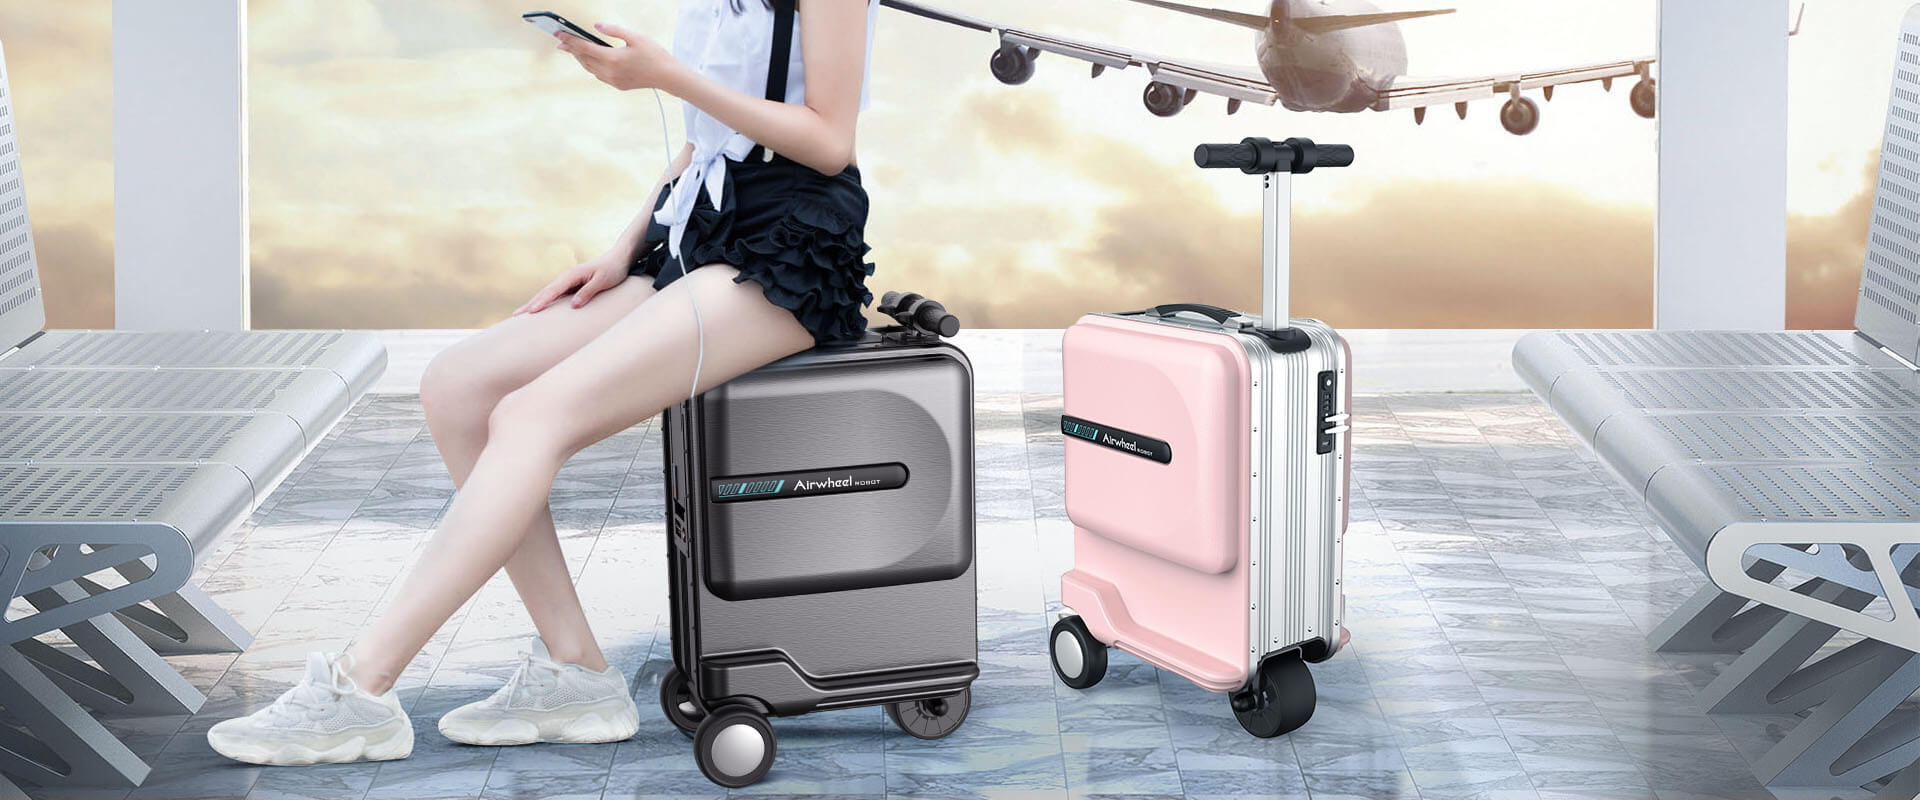 airwheel se3mini scooter suitcase